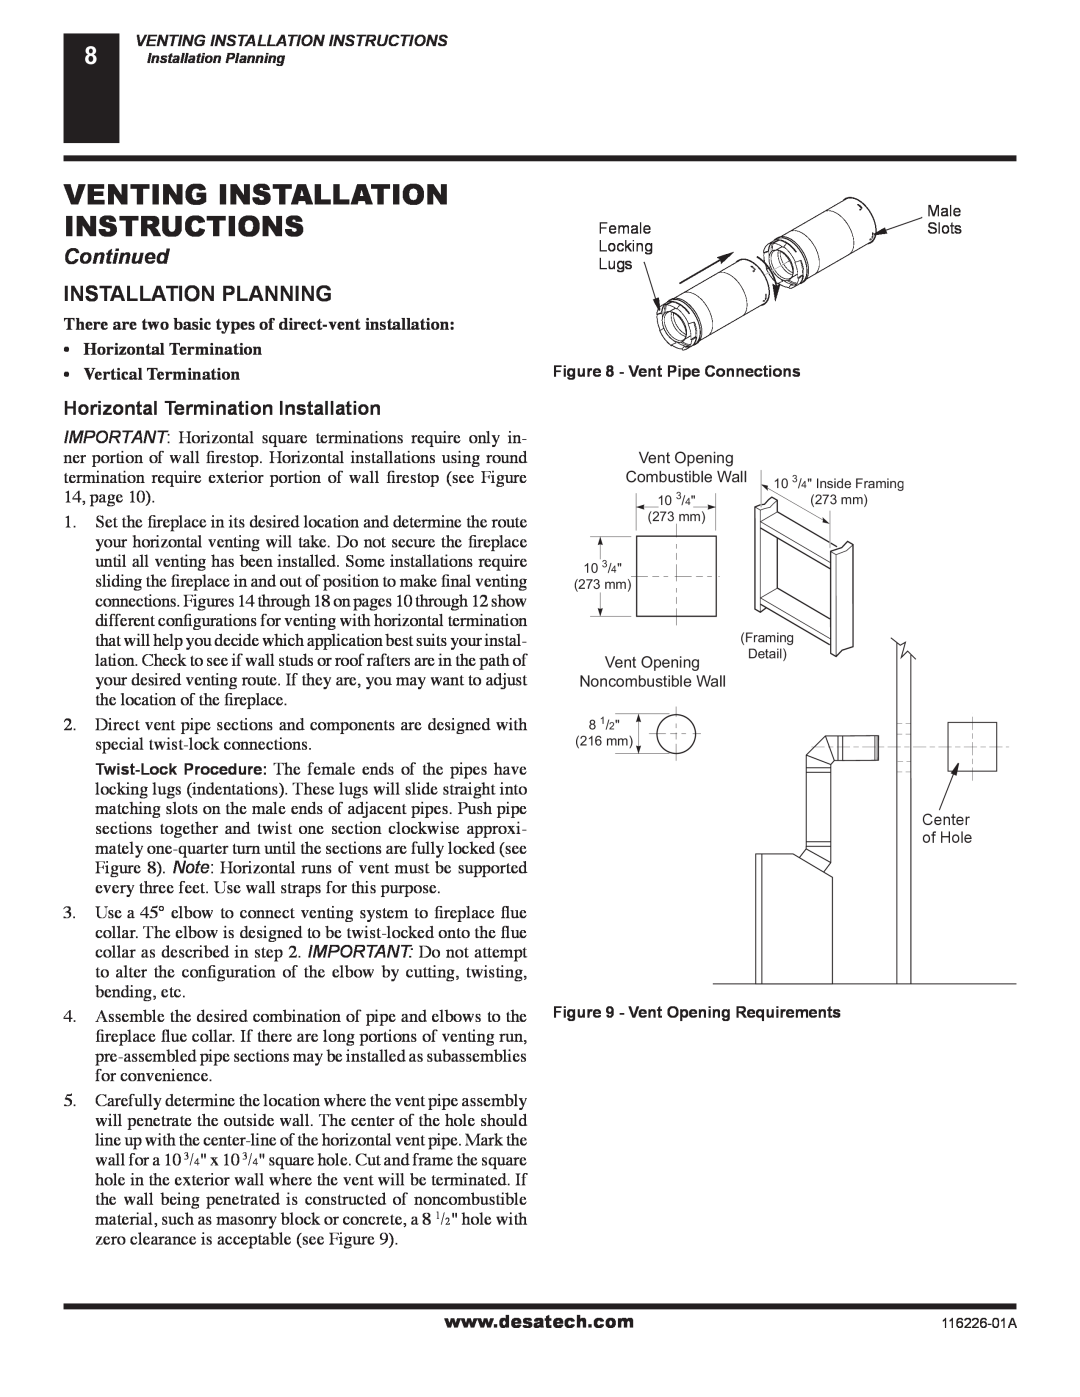 Desa (V)KC36N Installation Planning, Horizontal Termination Installation, Venting Installation Instructions, Continued 